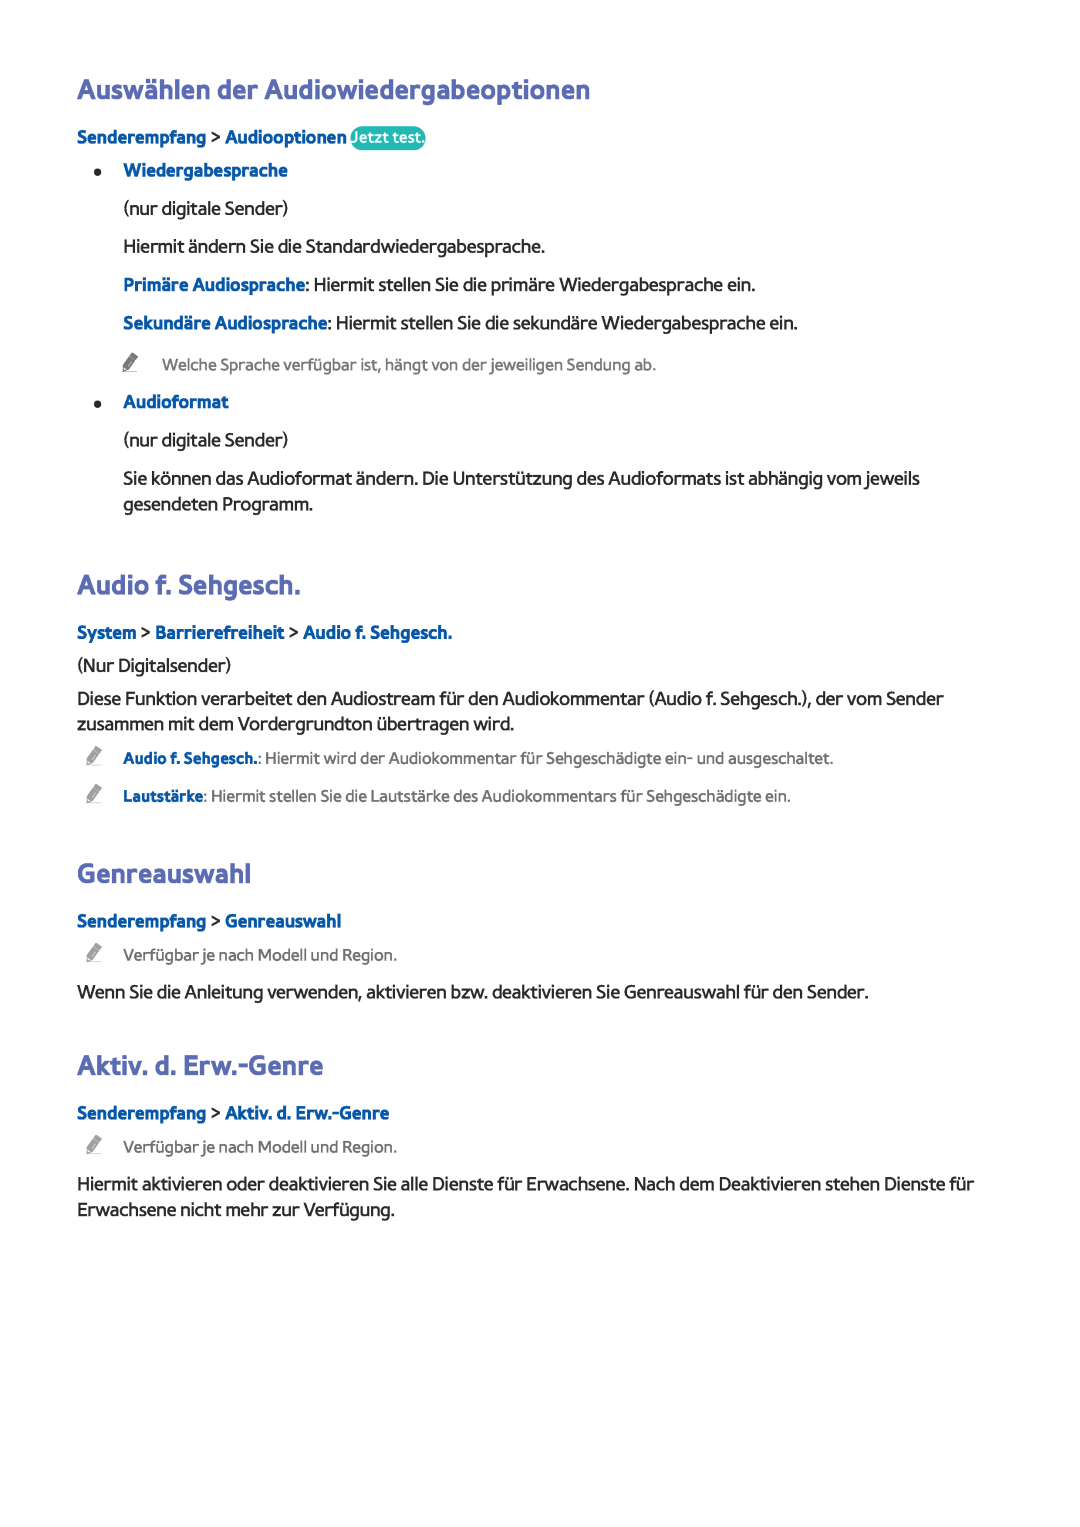 Samsung UE55J6150ASXZG manual Auswählen der Audiowiedergabeoptionen, Audio f. Sehgesch, Genreauswahl, Aktiv. d. Erw.-Genre 